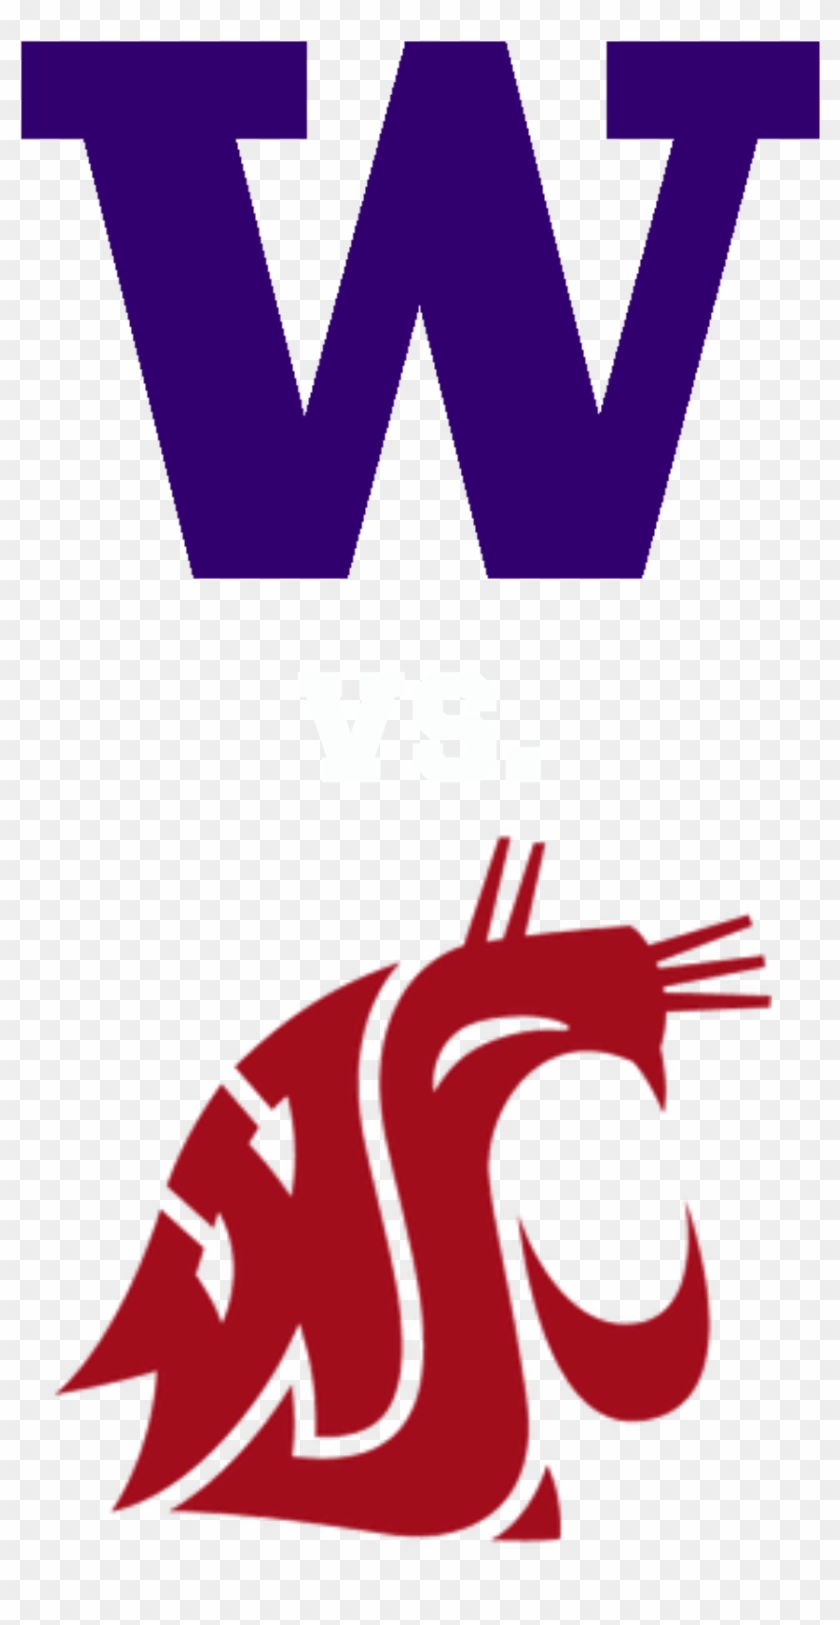 Huskies Vs Cougars - Washington State University Mascot #493842